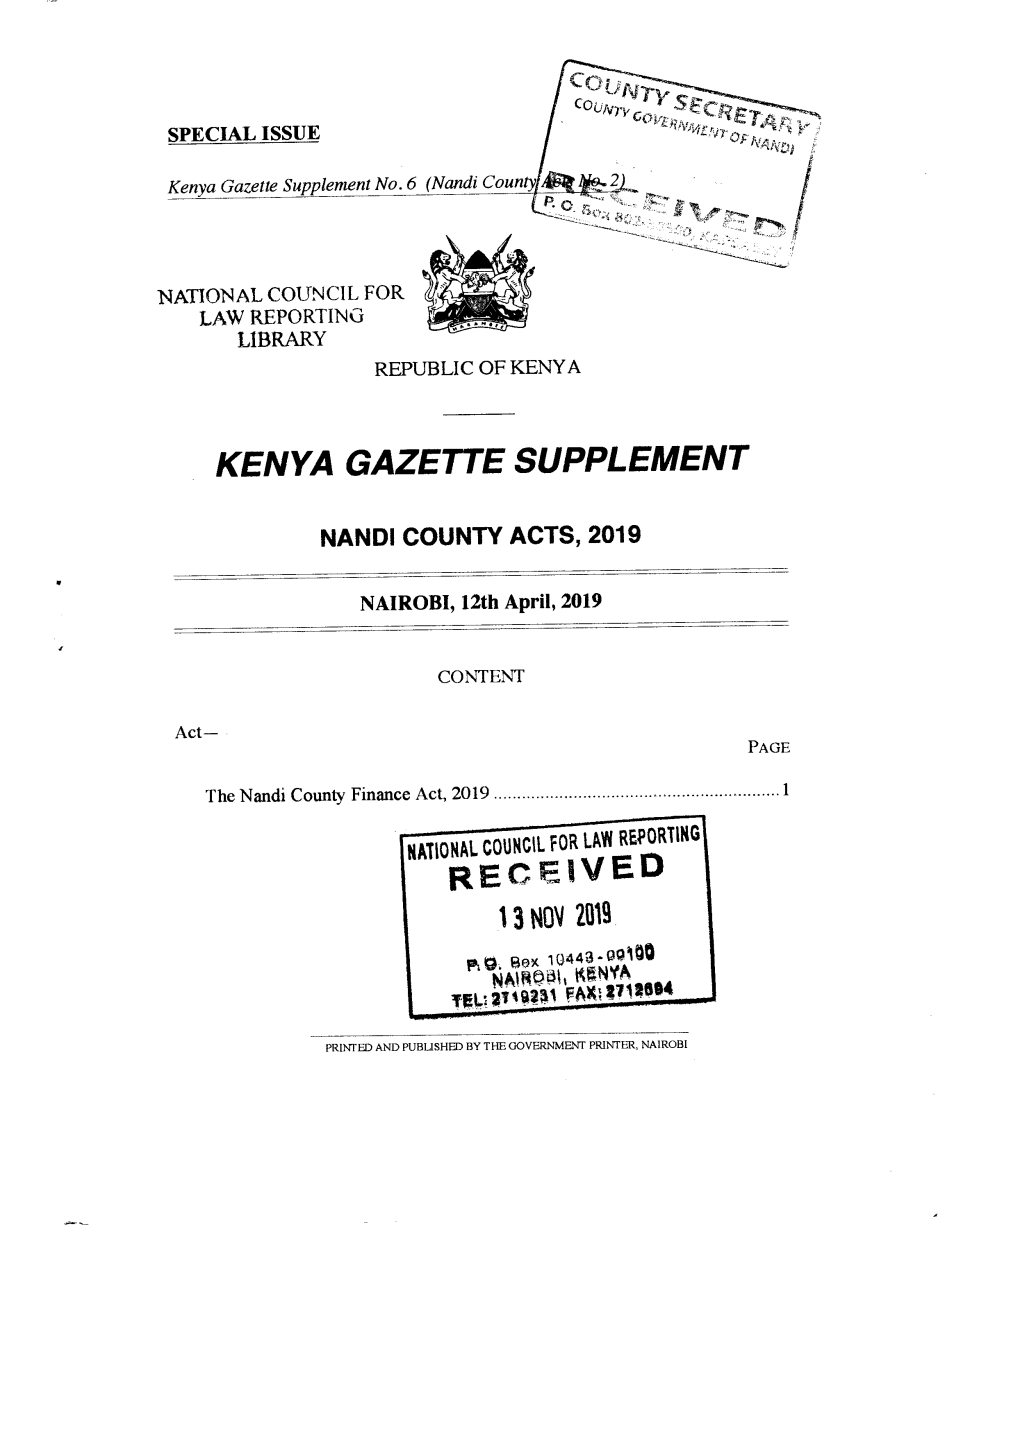 Kenya Gazette Supplement Received